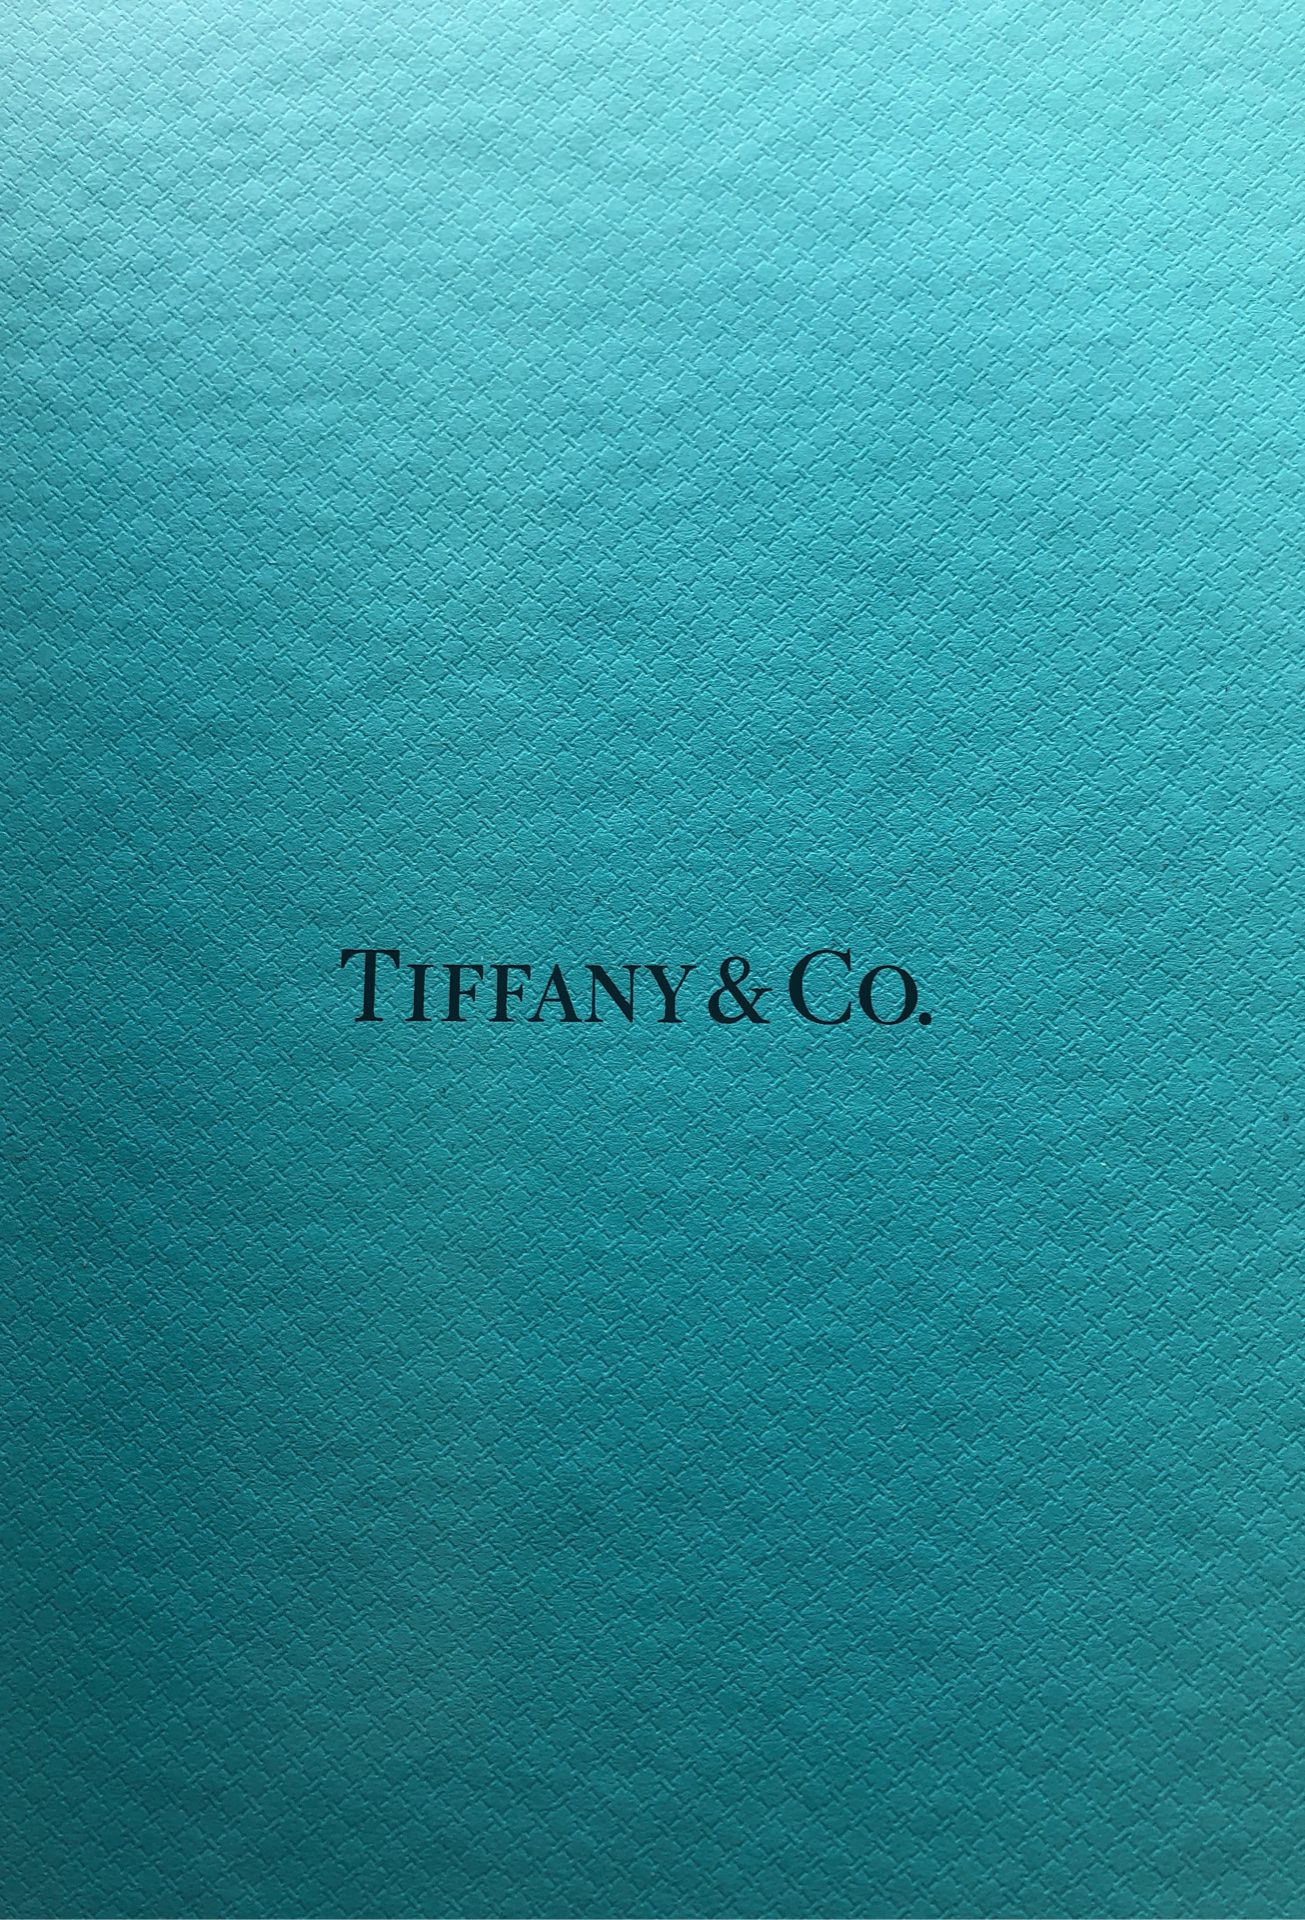 Tiffany blue box in mint condition 13x6x8